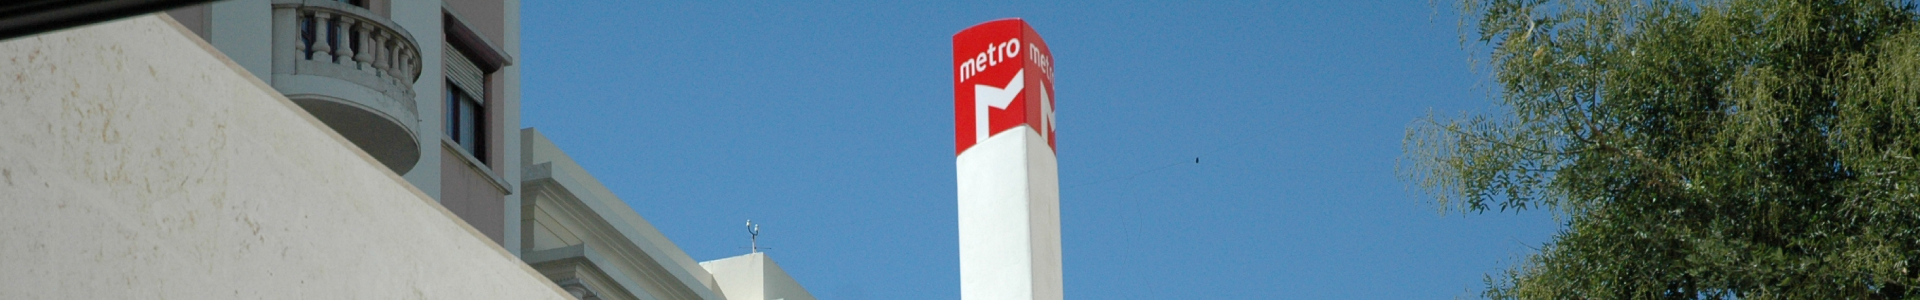 Metro post at a station entrance